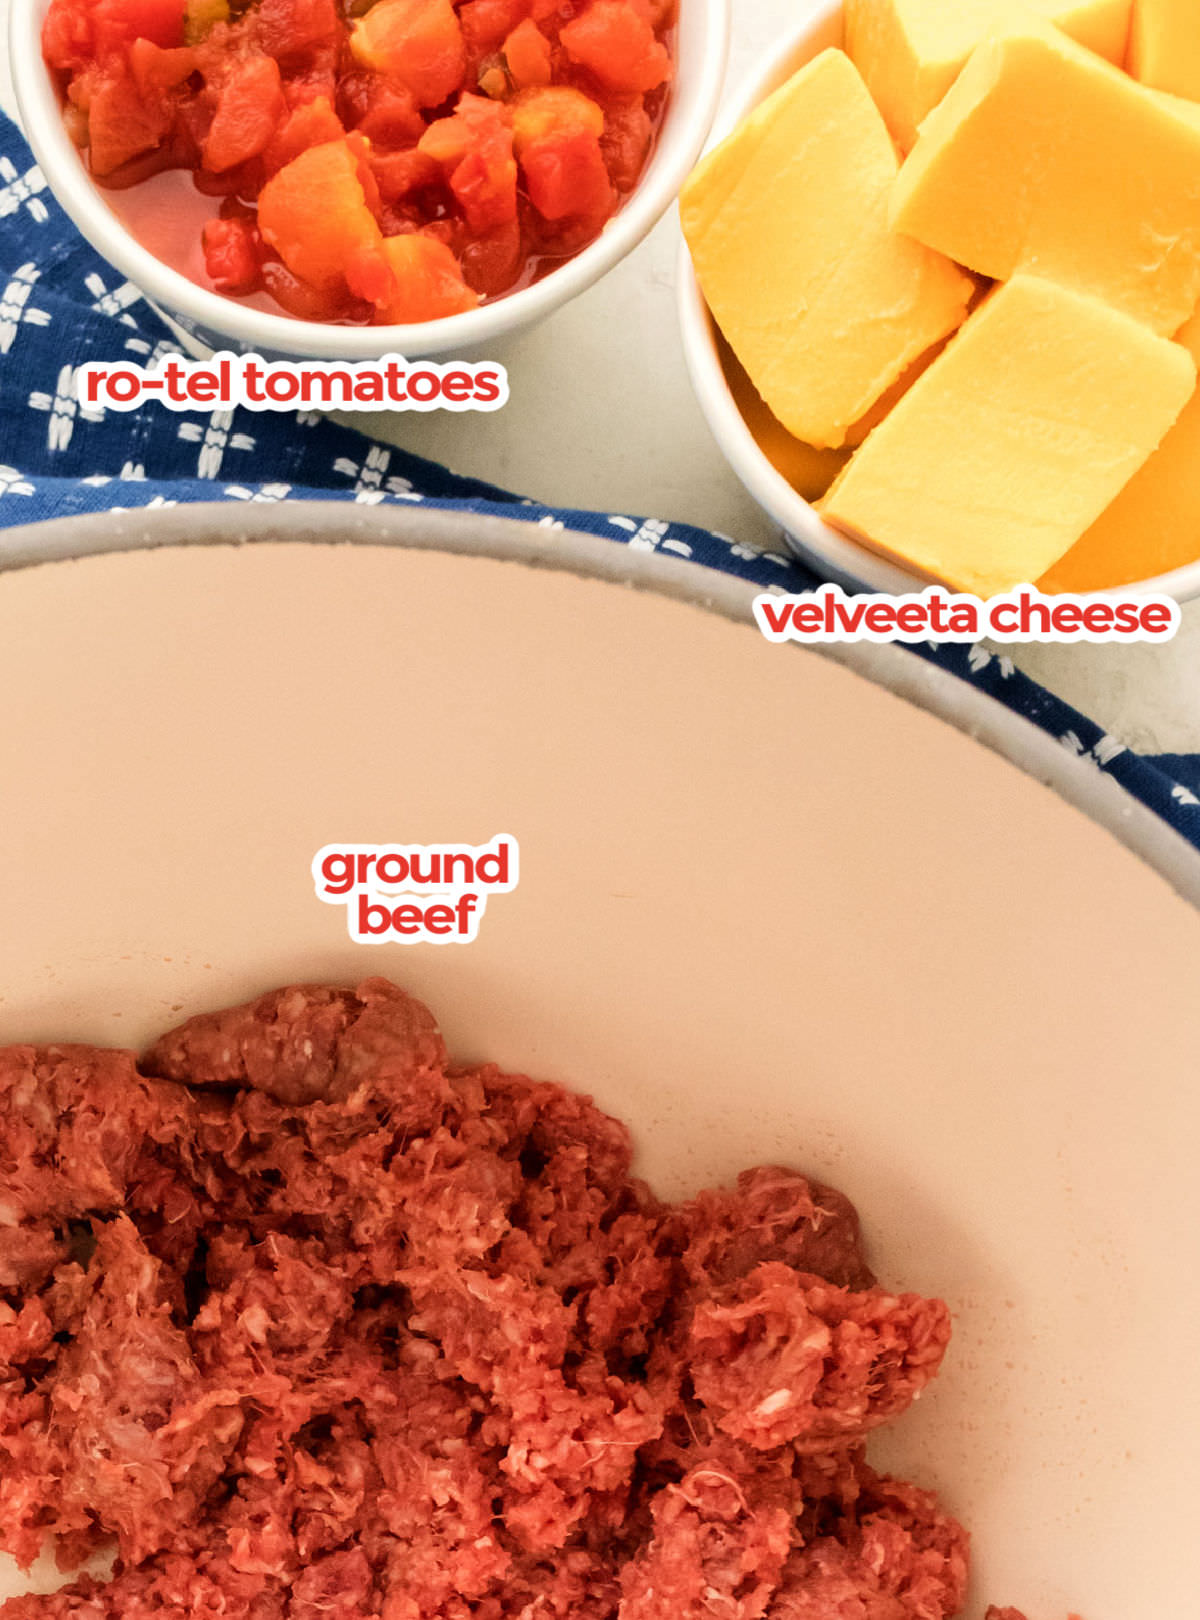 Ingredients needed to make Rotel Dip including Ground Beef, Velveeta Cheese, and Ro-Tel Tomatoes.